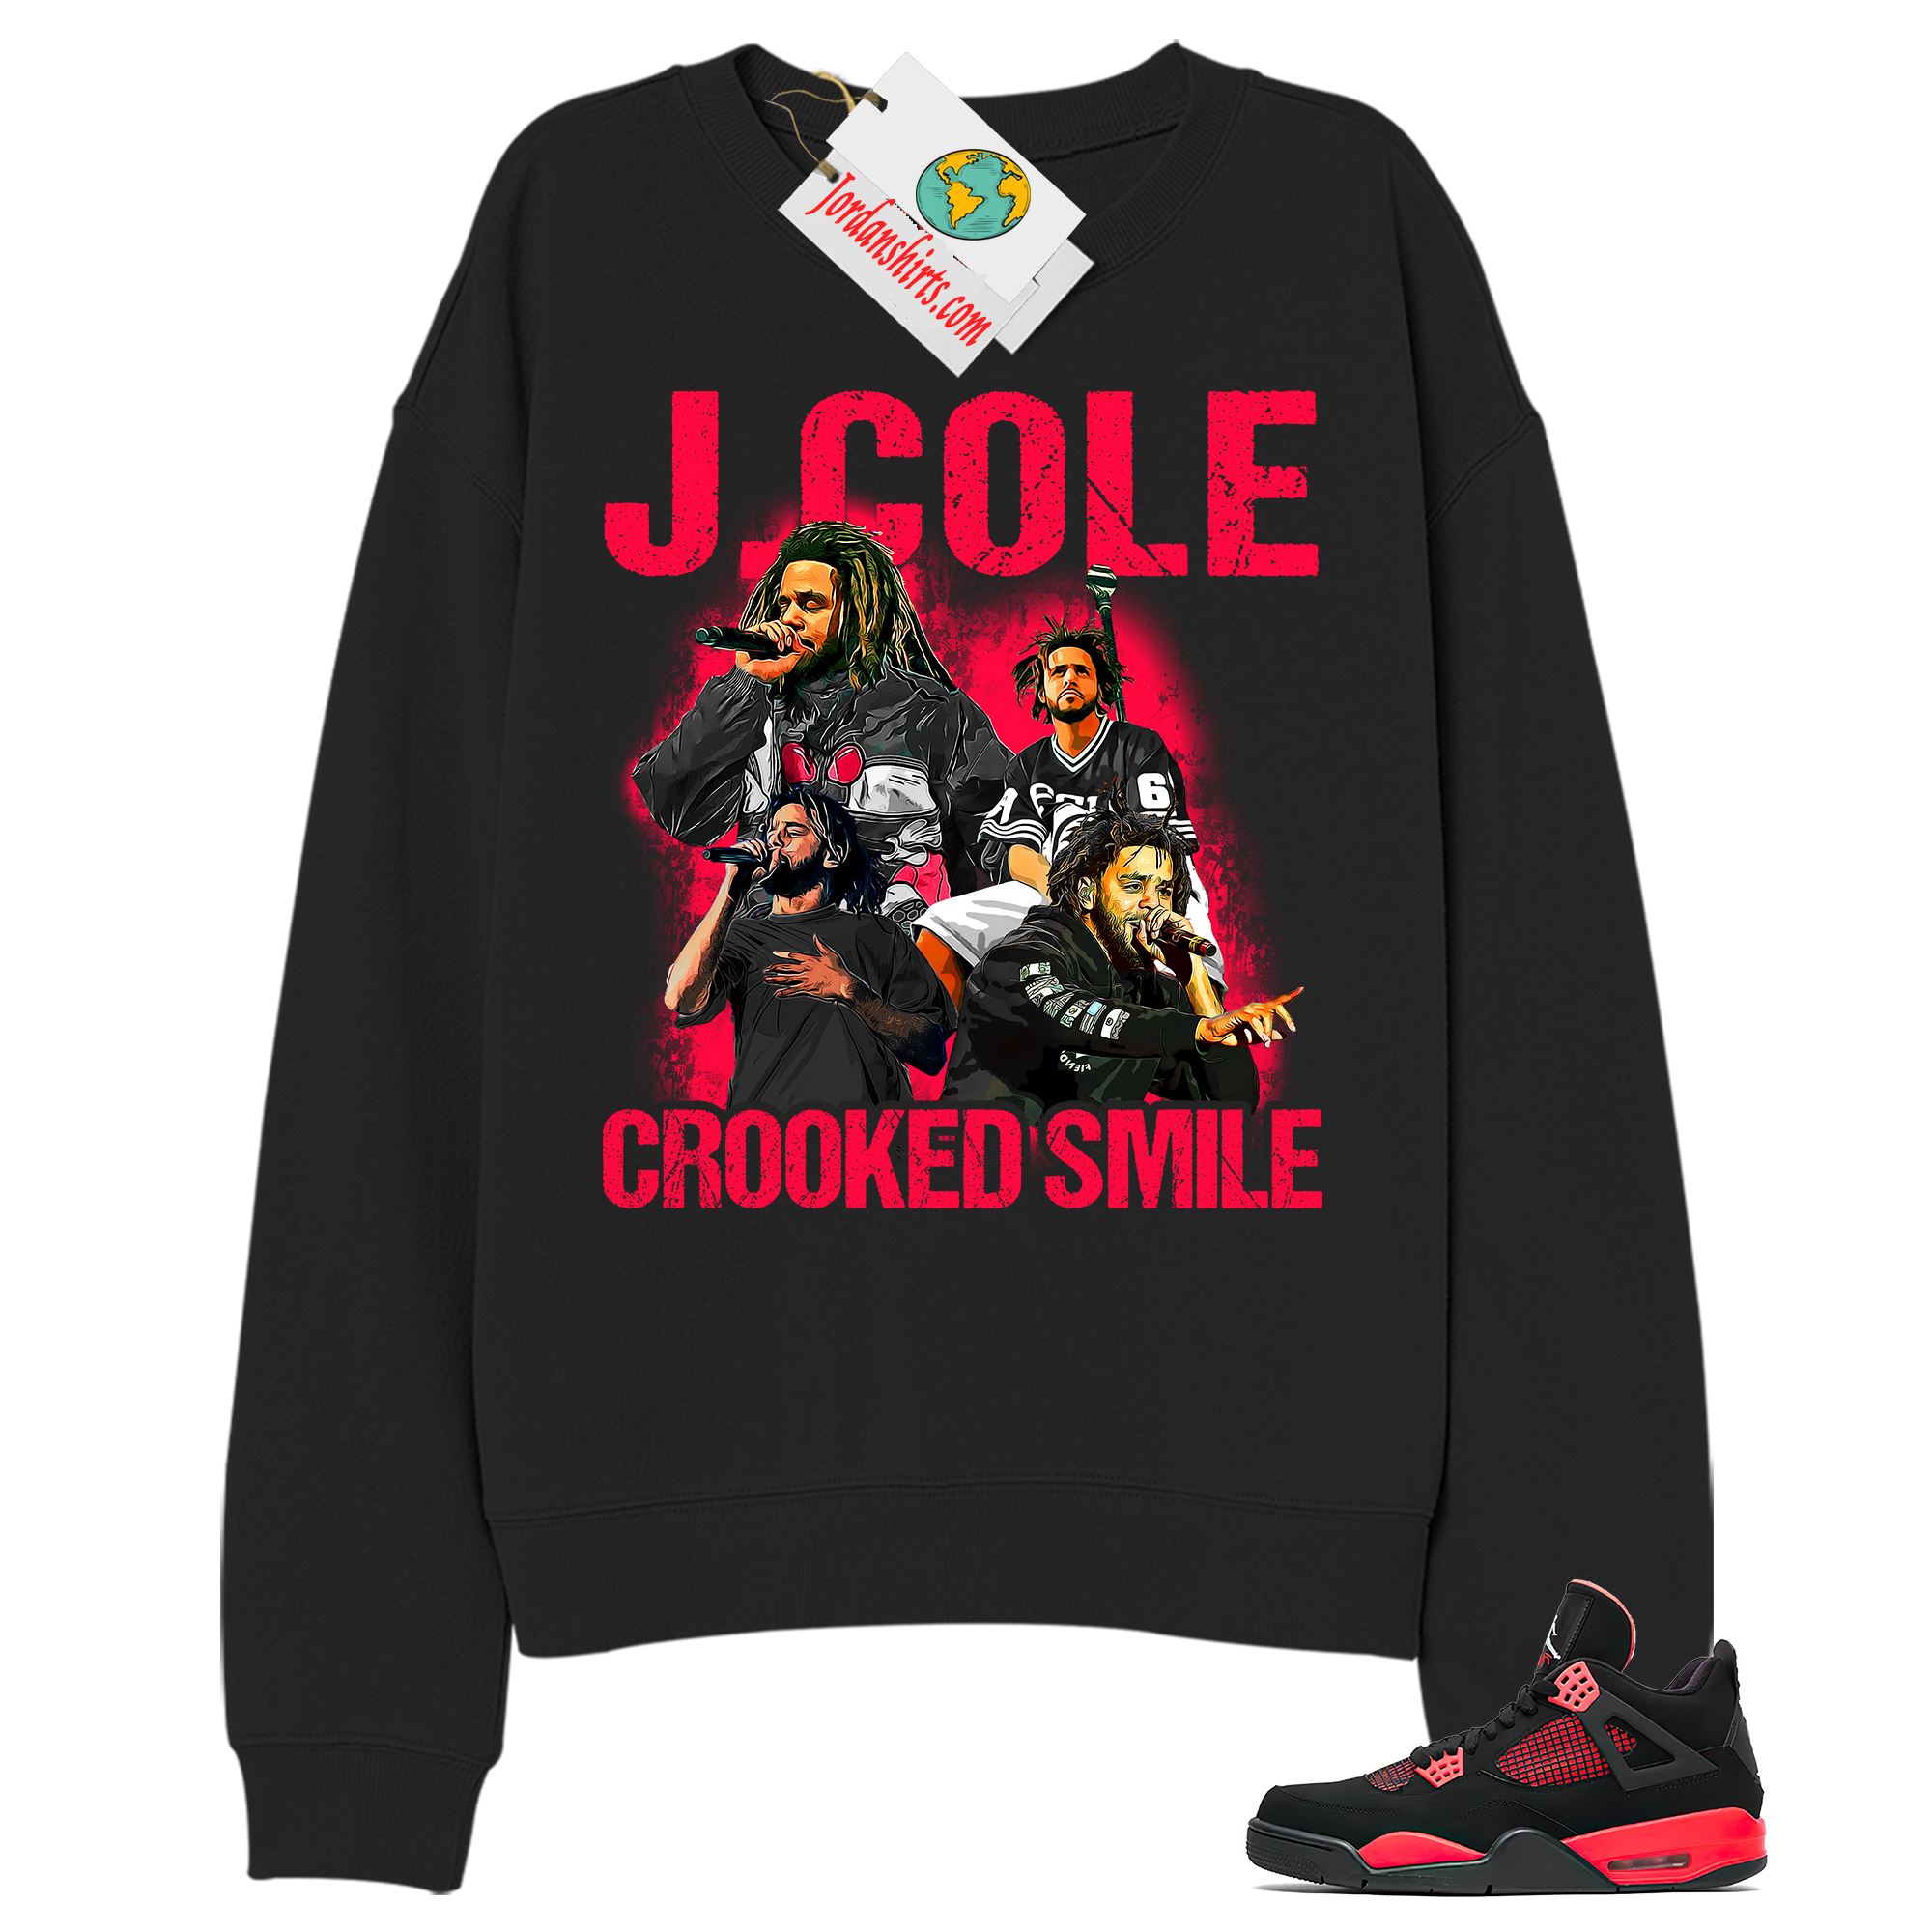 Jordan 4 Sweatshirt, J Cole Bootleg Vintage Raptee Black Sweatshirt Air Jordan 4 Red Thunder 4s Plus Size Up To 5xl